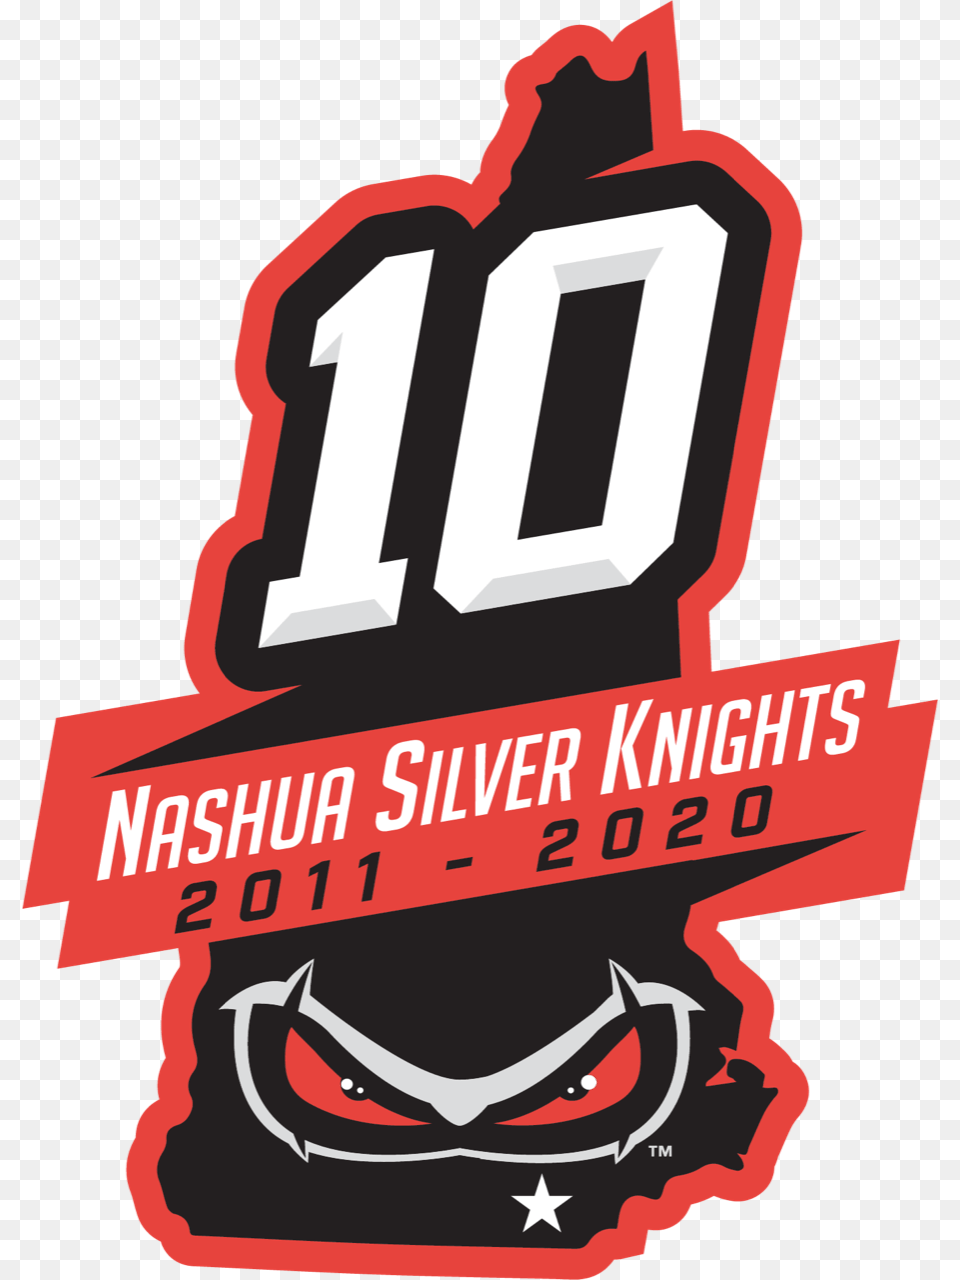 Nashua Silver Knights, Advertisement, Poster, Logo, Dynamite Free Png Download